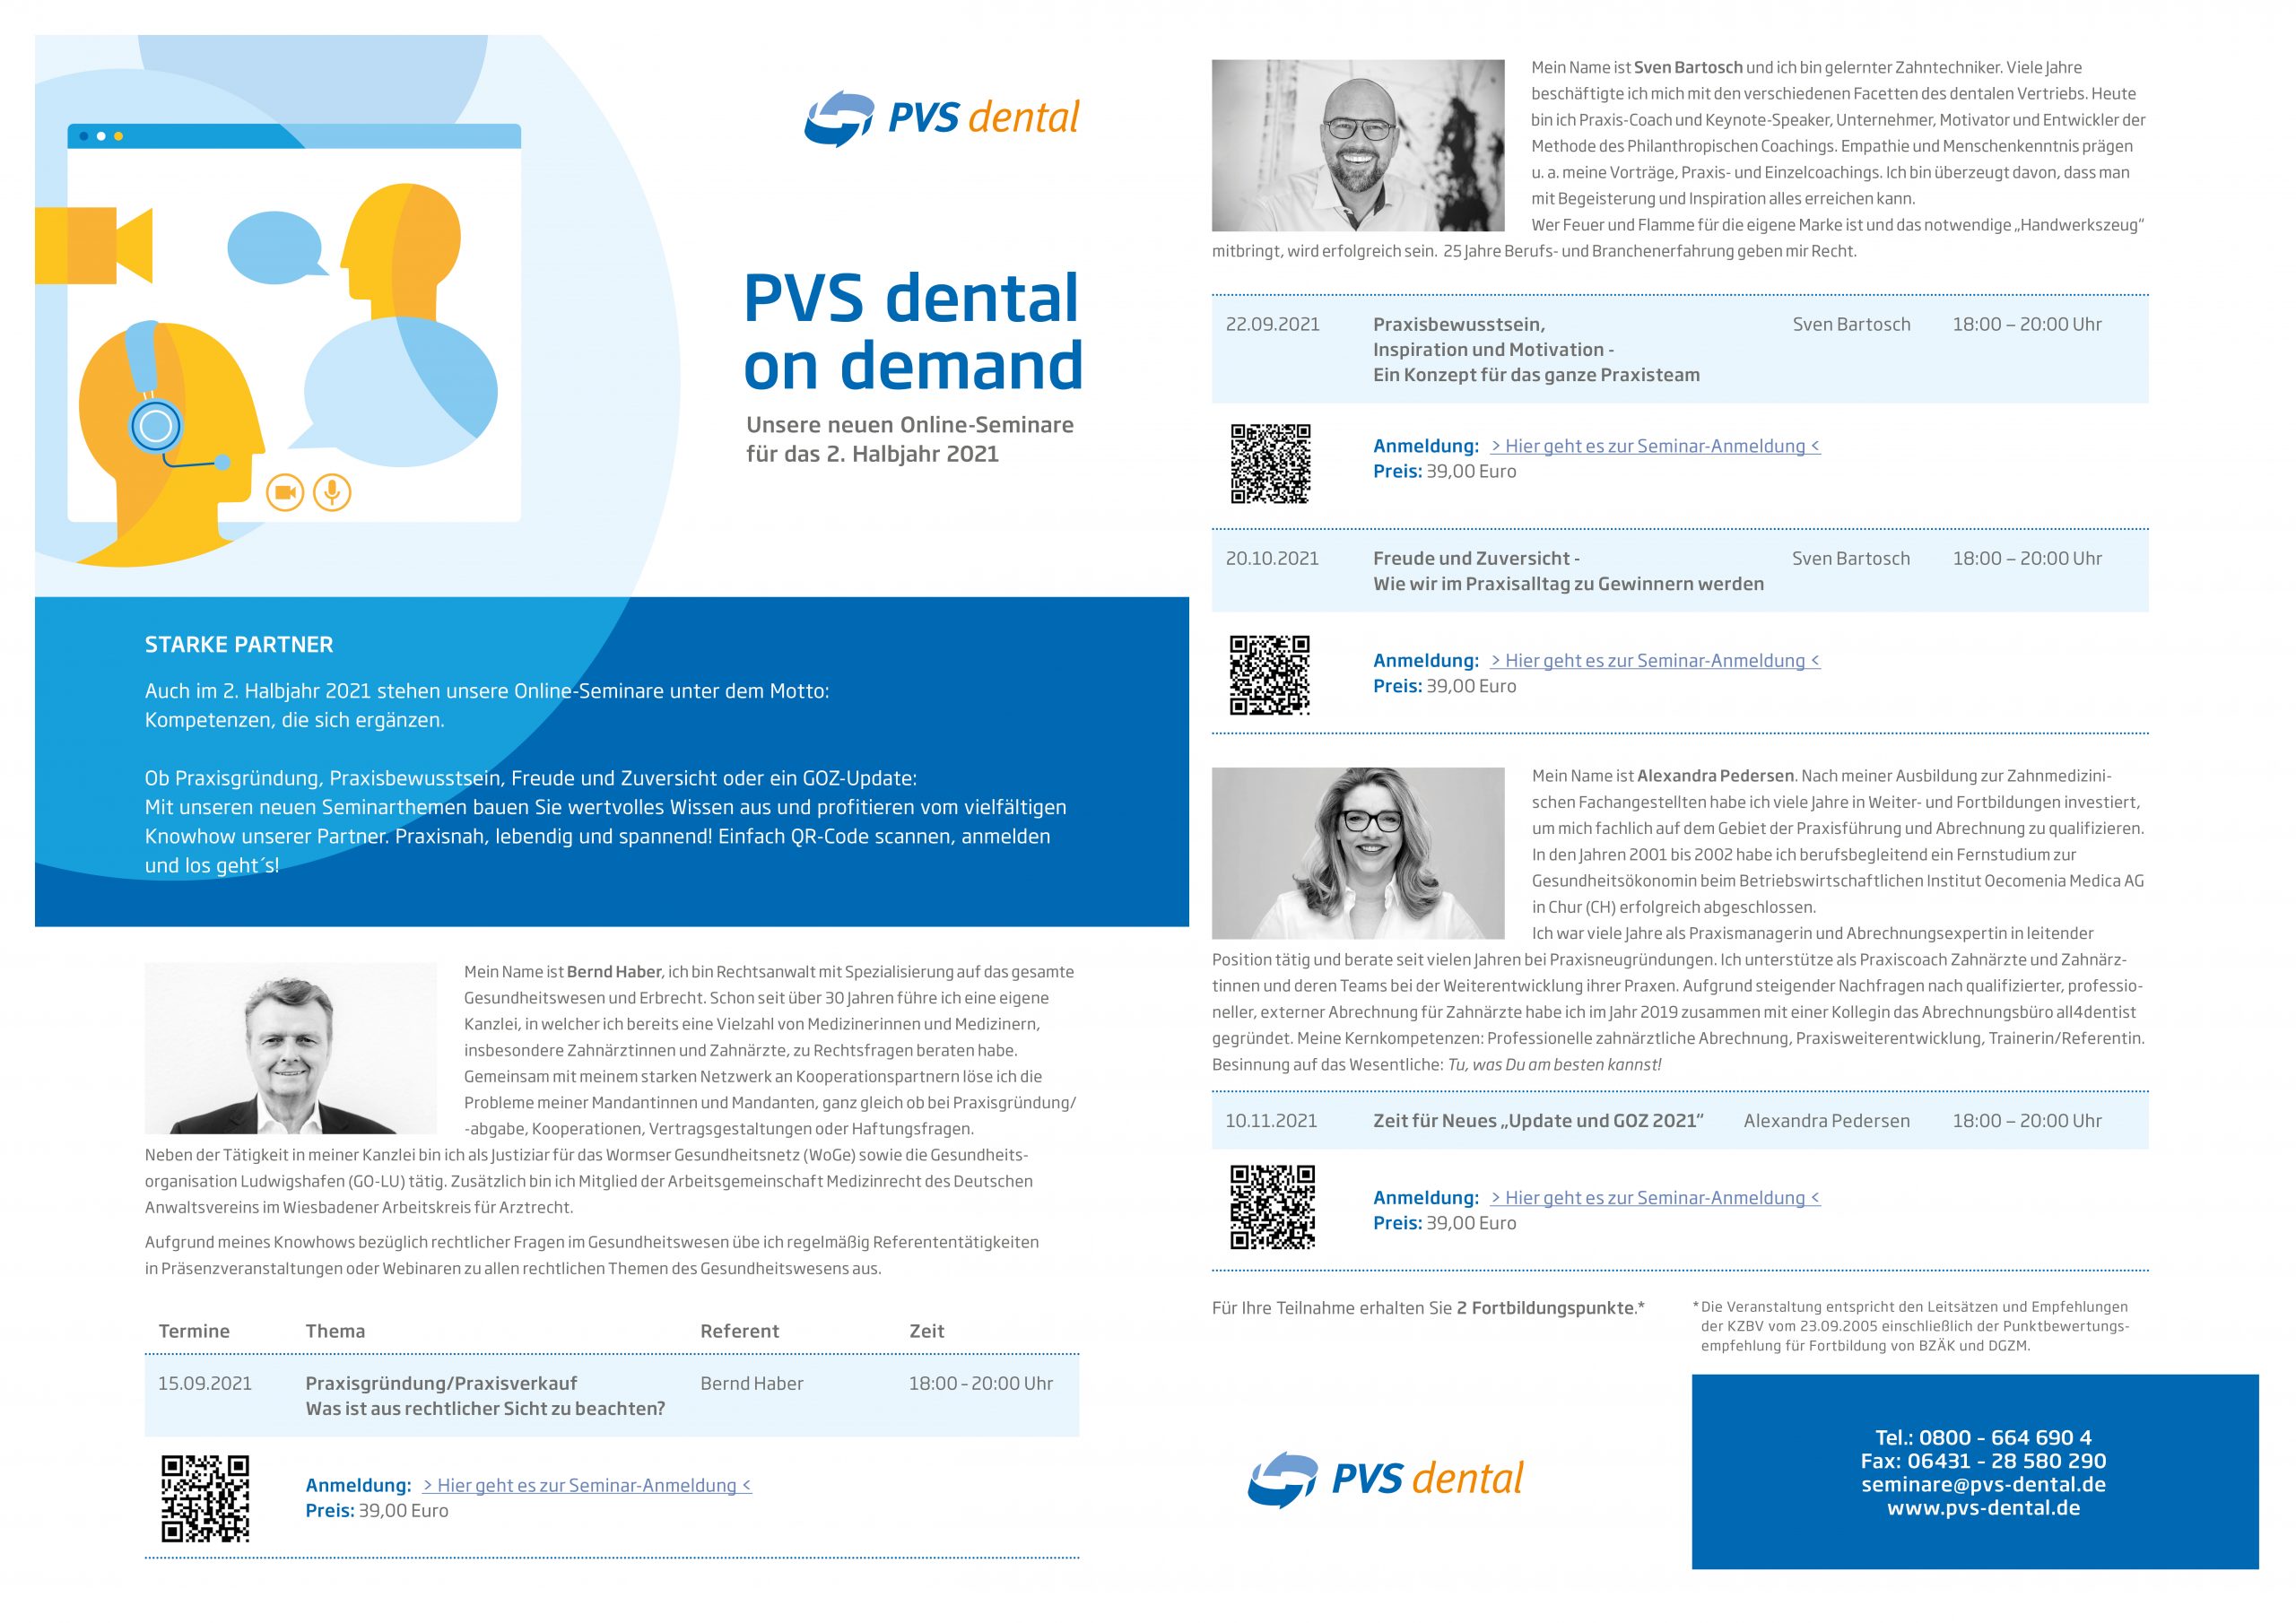 PVS dental on demand